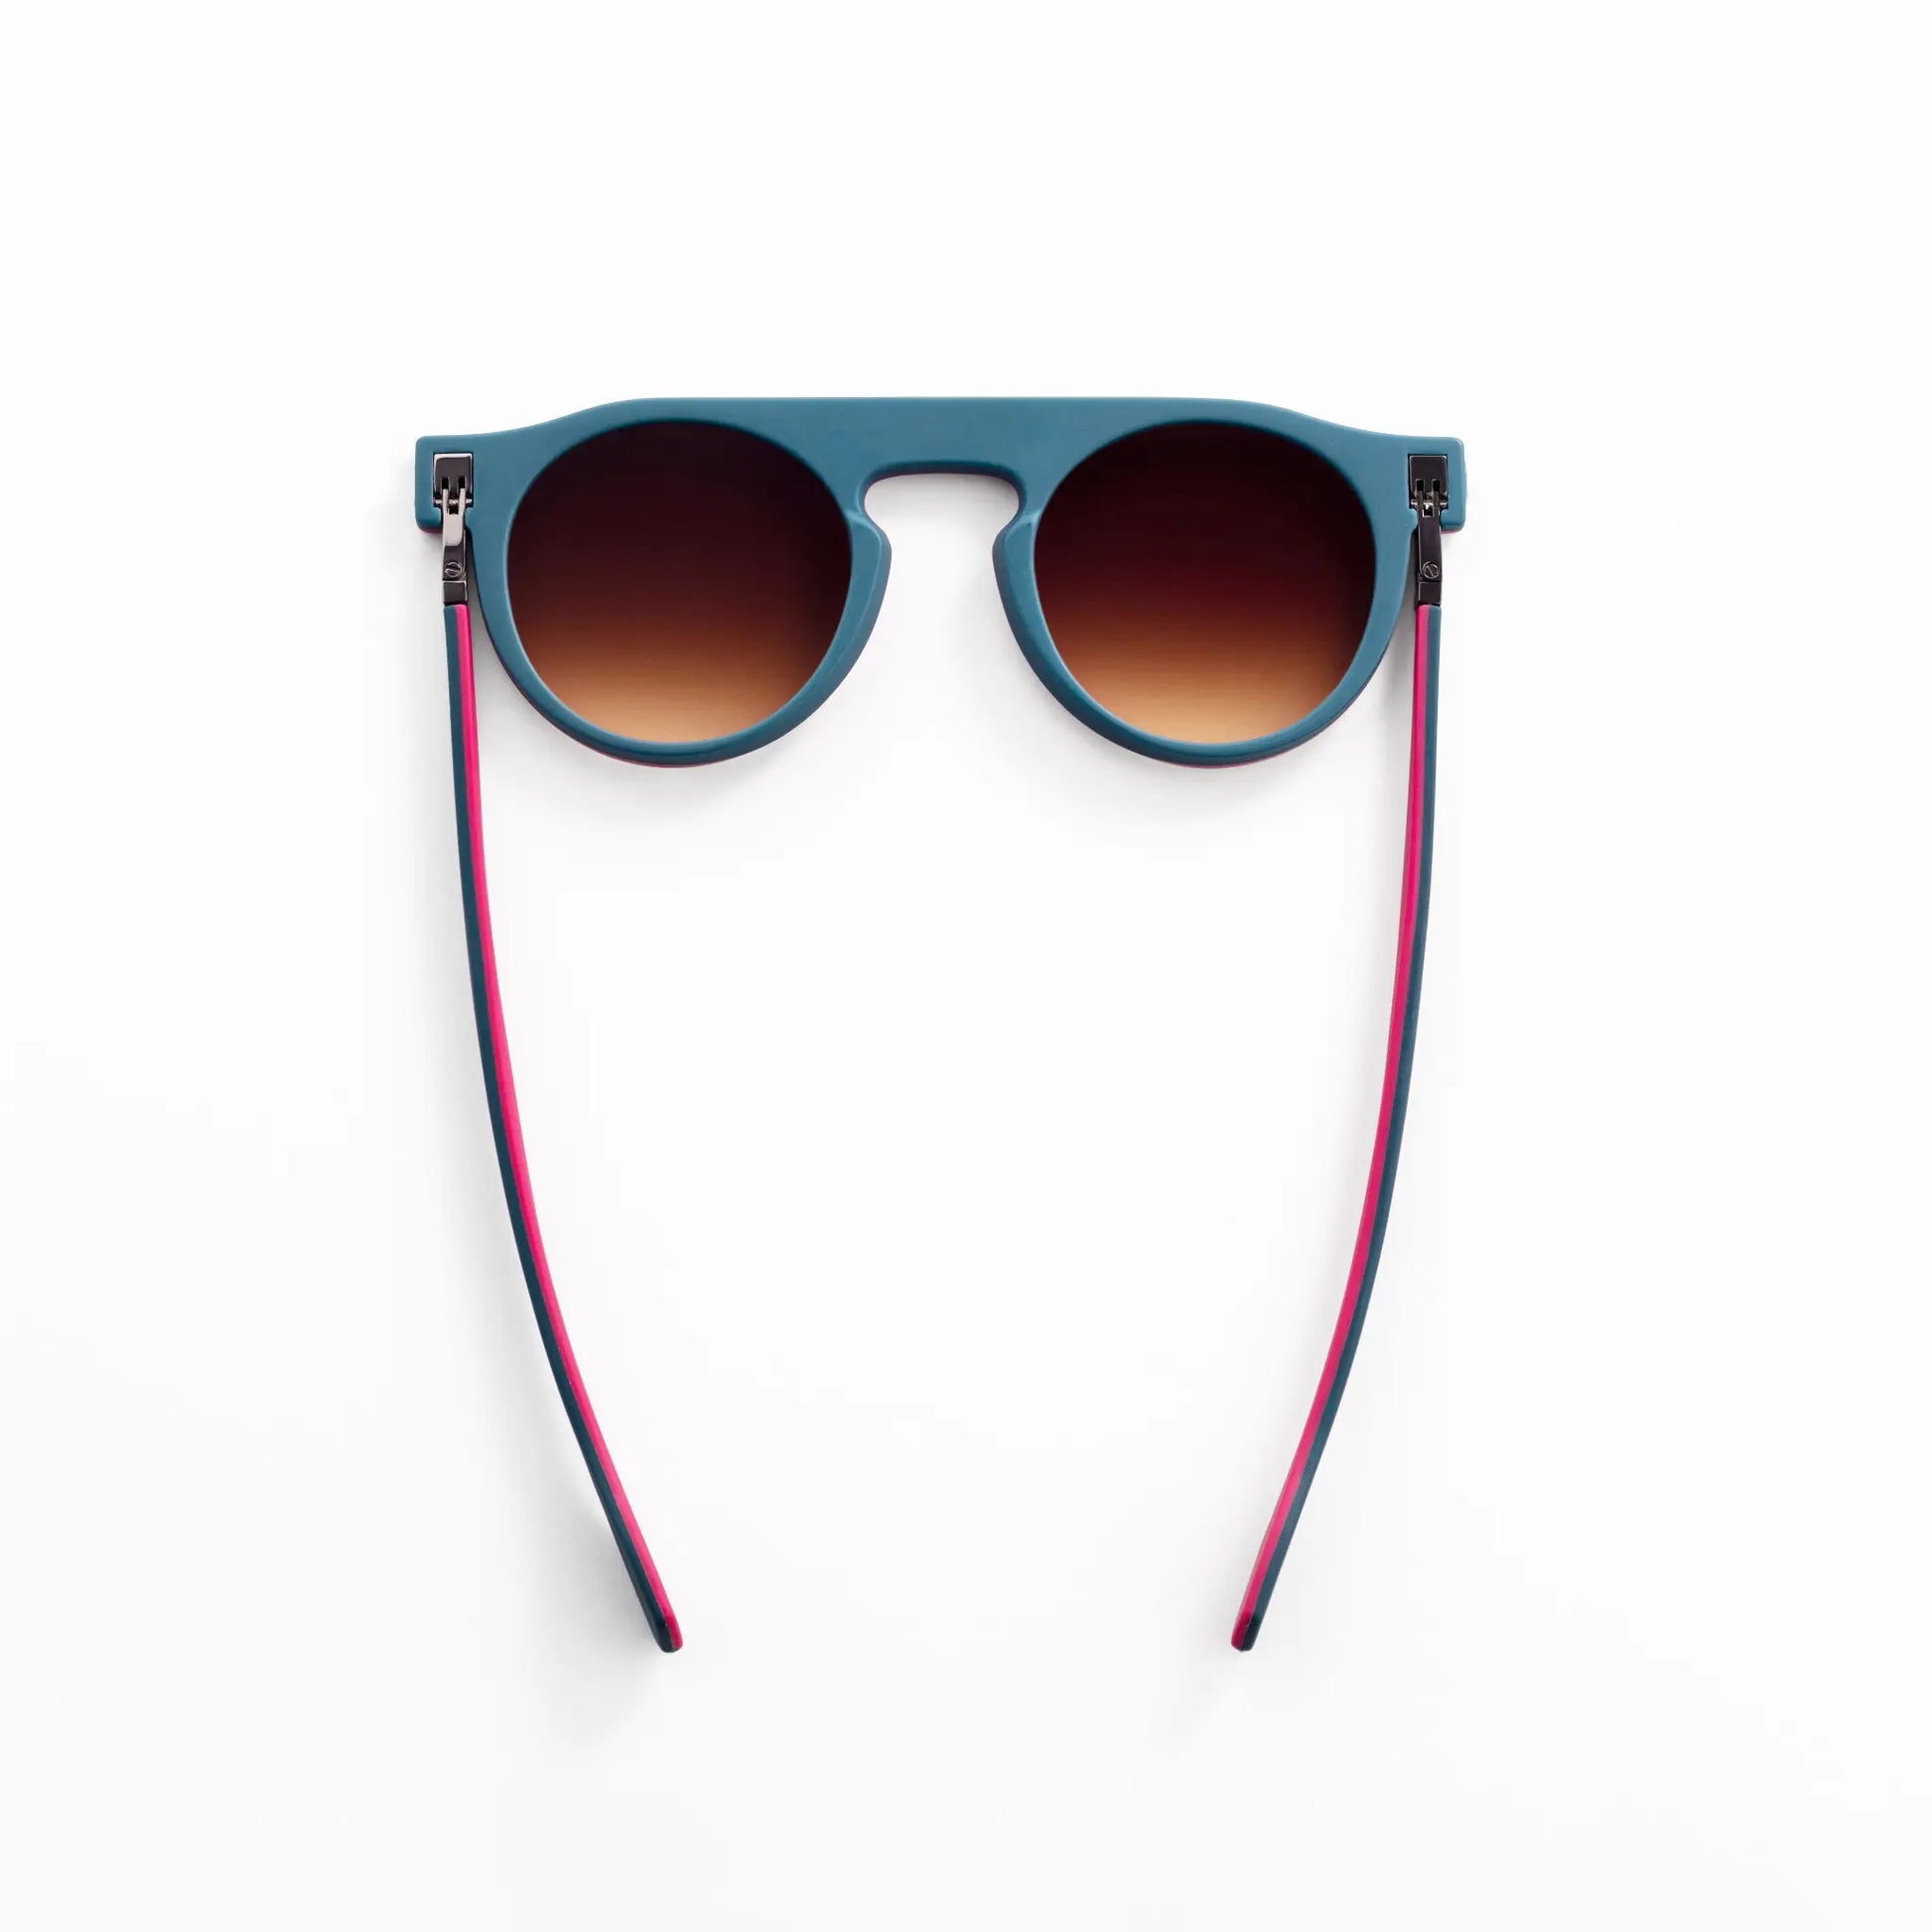 Reverso sunglasses pink & petrol reversible & ultra light top view